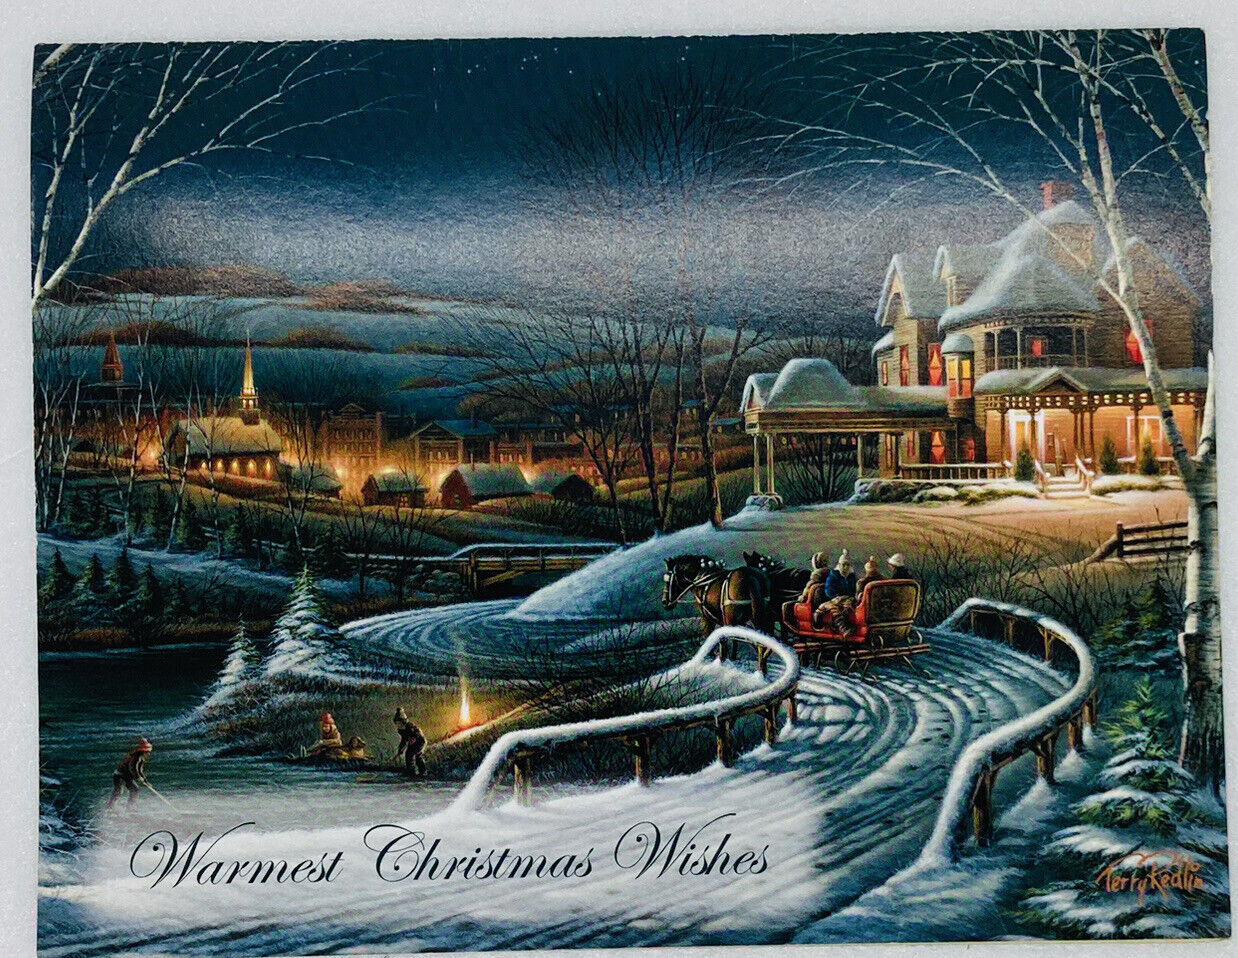 VTG Holiday Card “Warmest Christmas Wishes” Hockey Horse Wagon Snow House P3